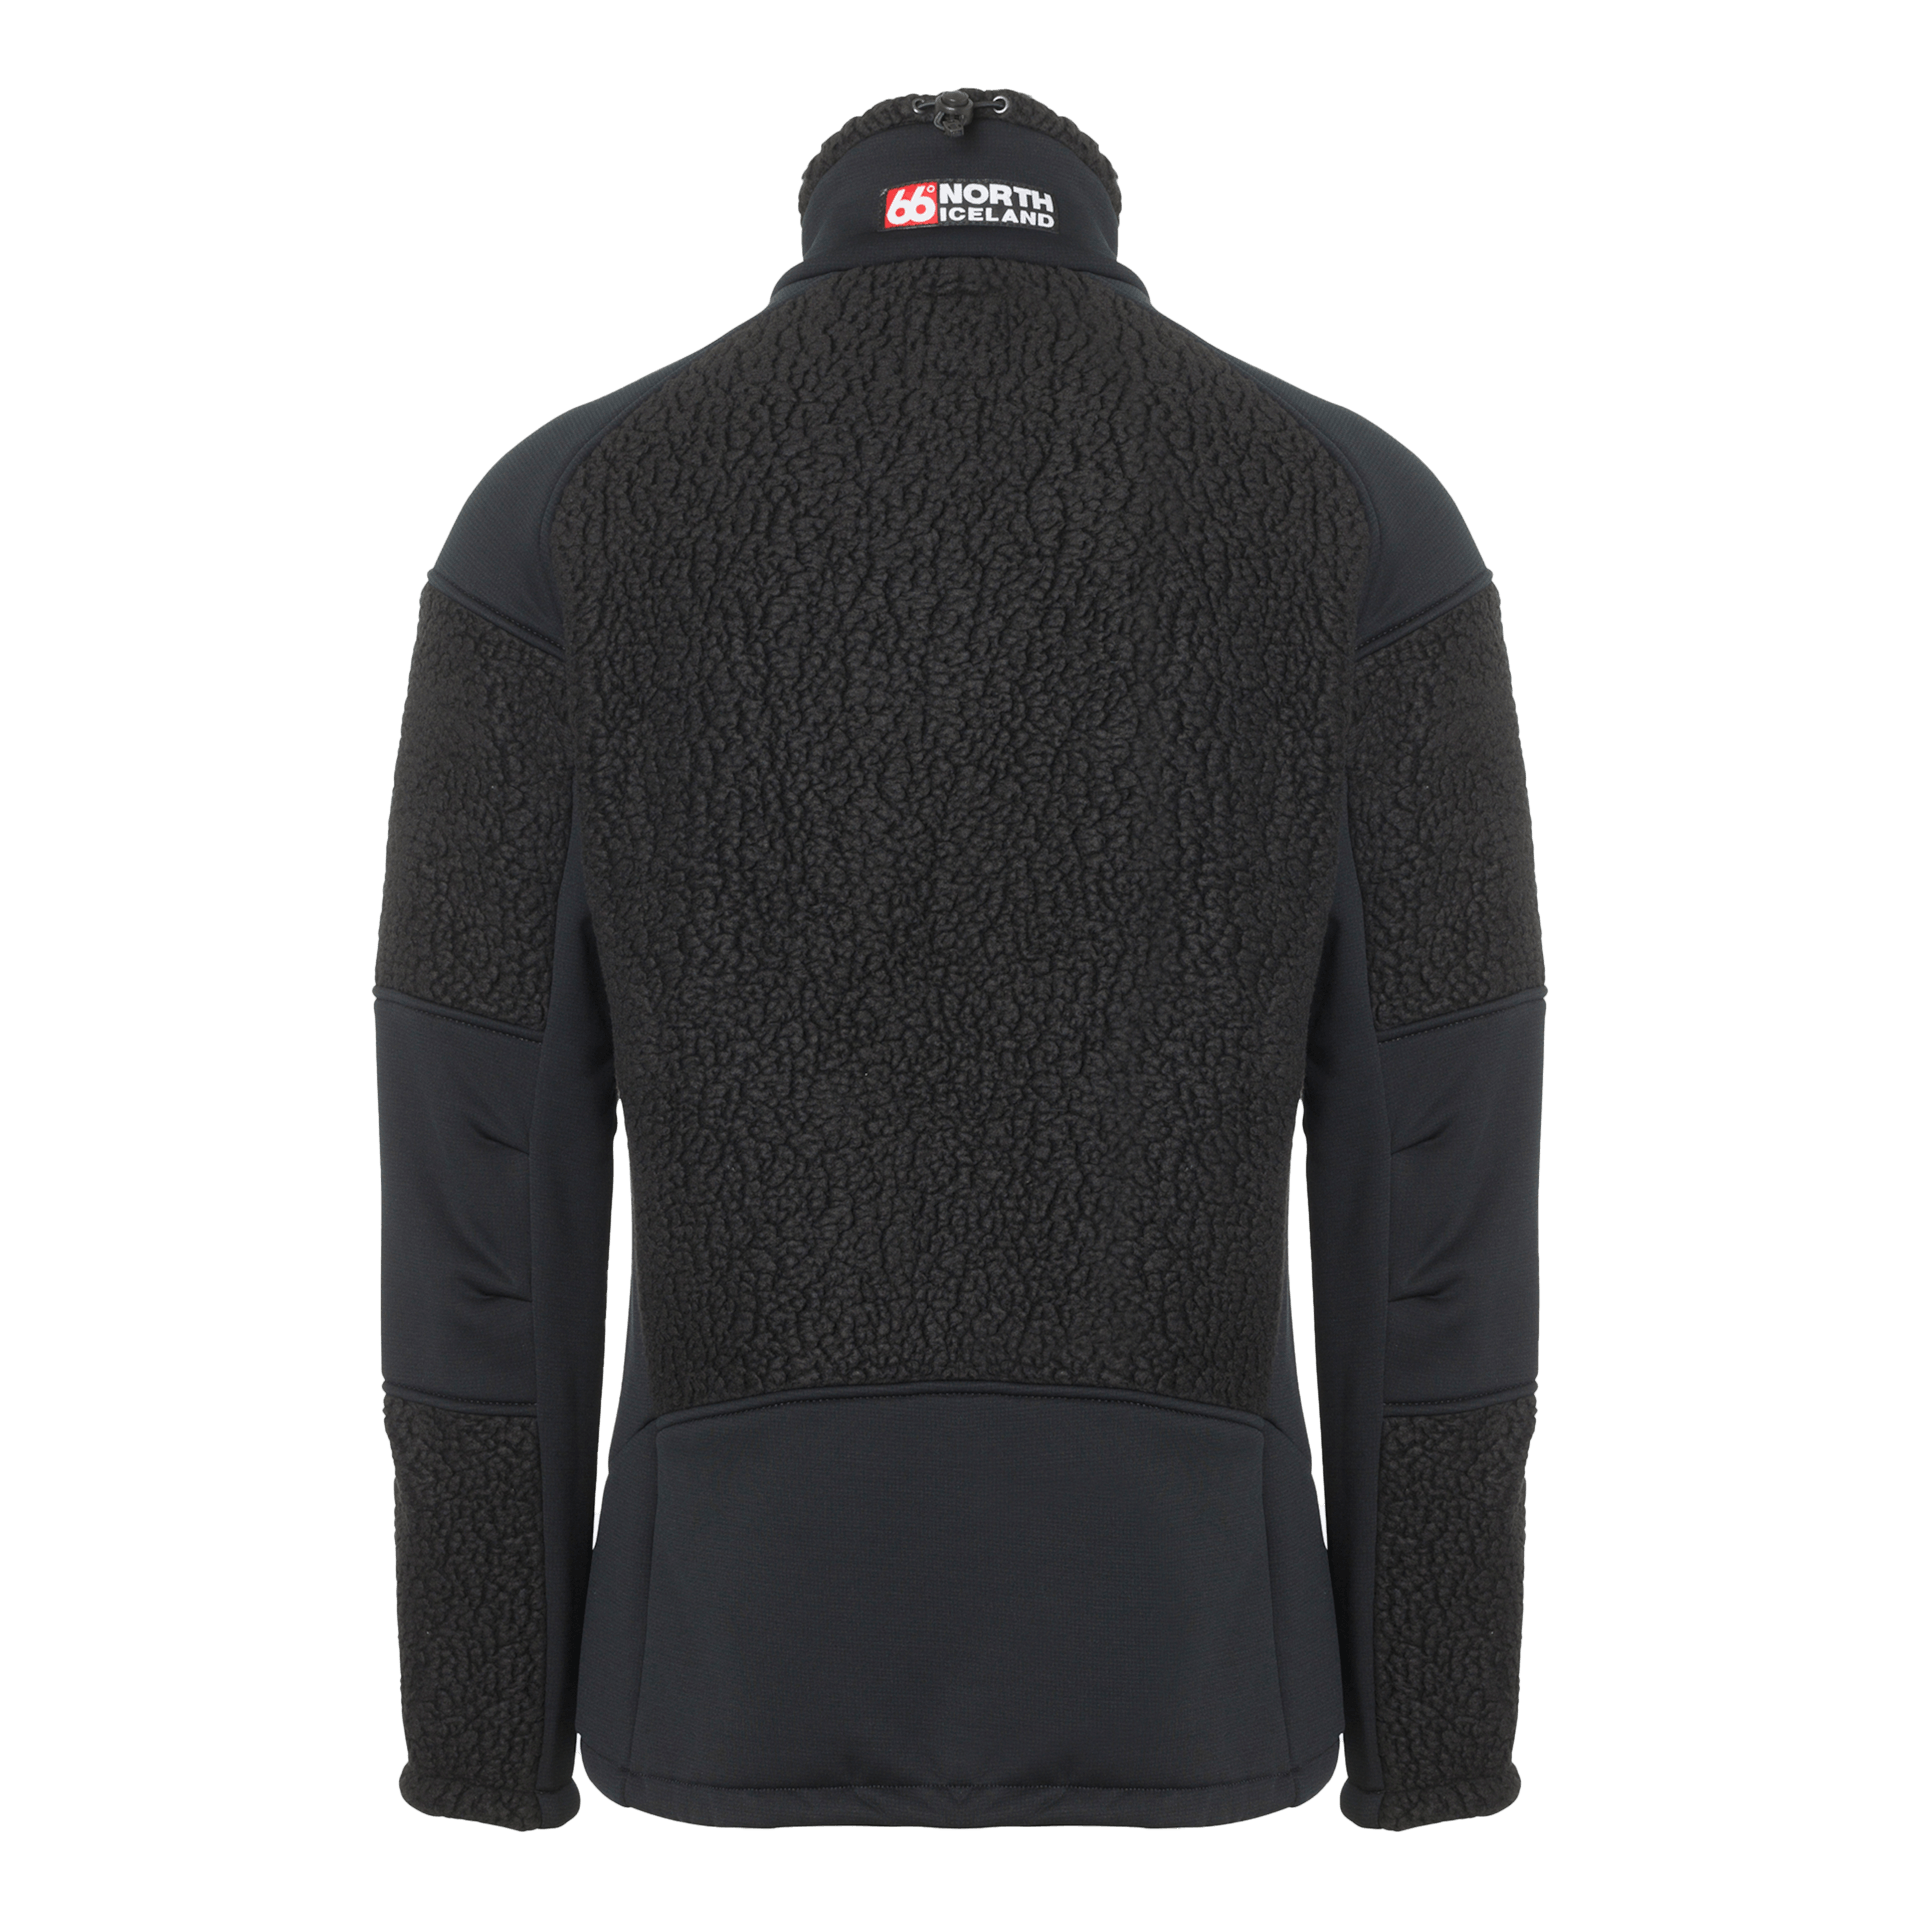 66°North Tindur Fleece Sweater Jacket